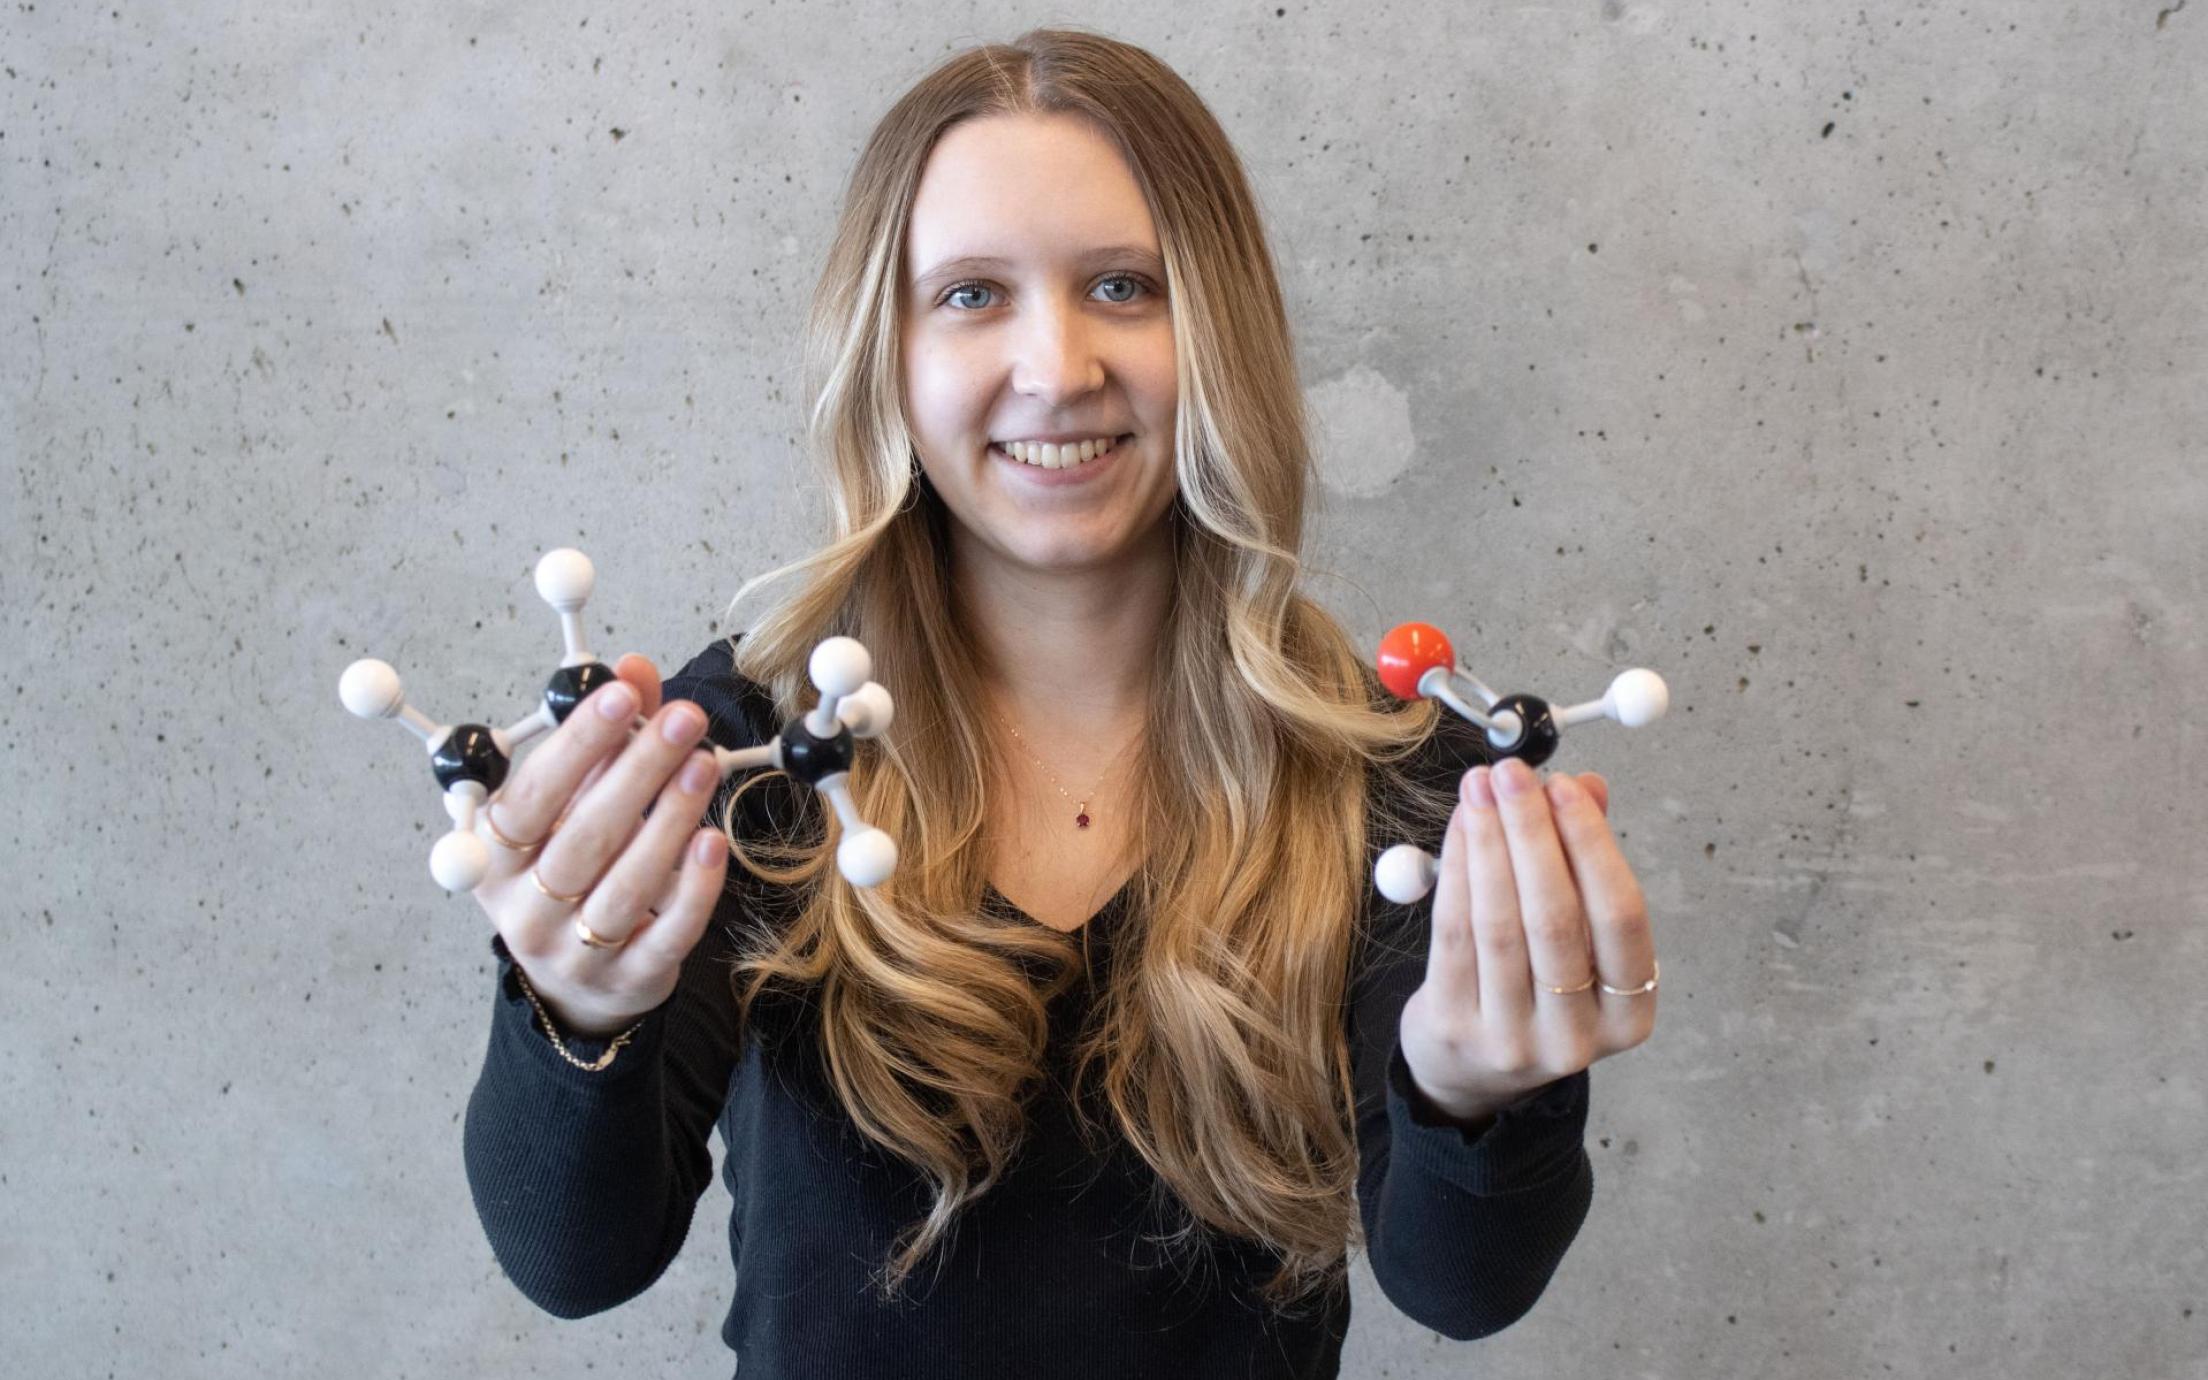 Savannah Mercer holds up DNA models